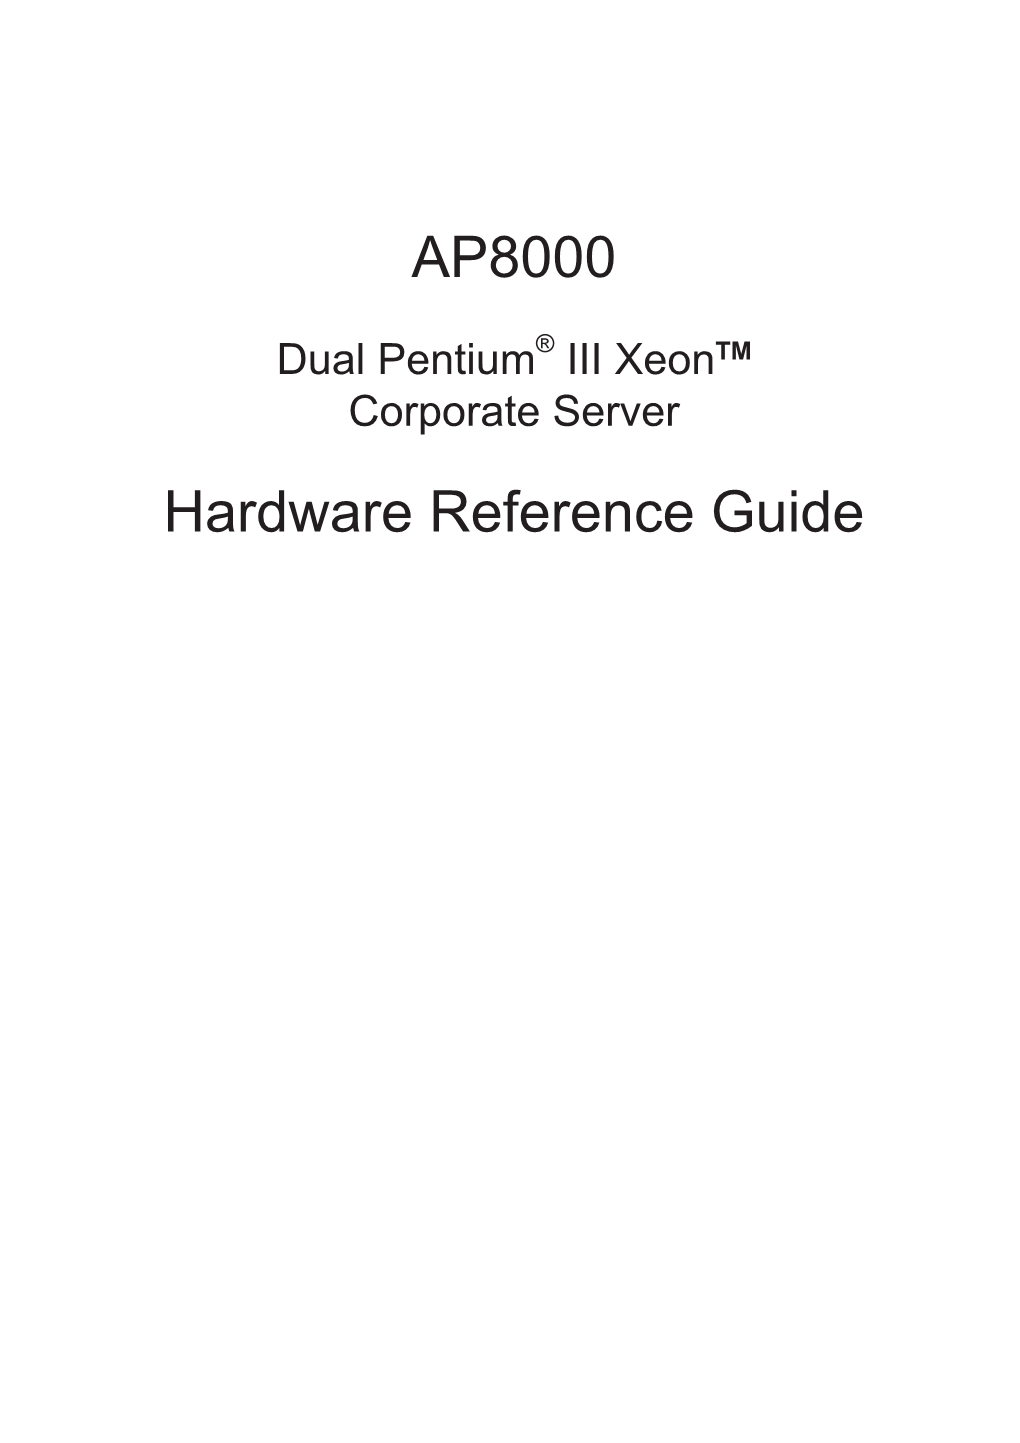 AP8000 Hardware Reference Guide ASUS Contact Information Asustek COMPUTER INC